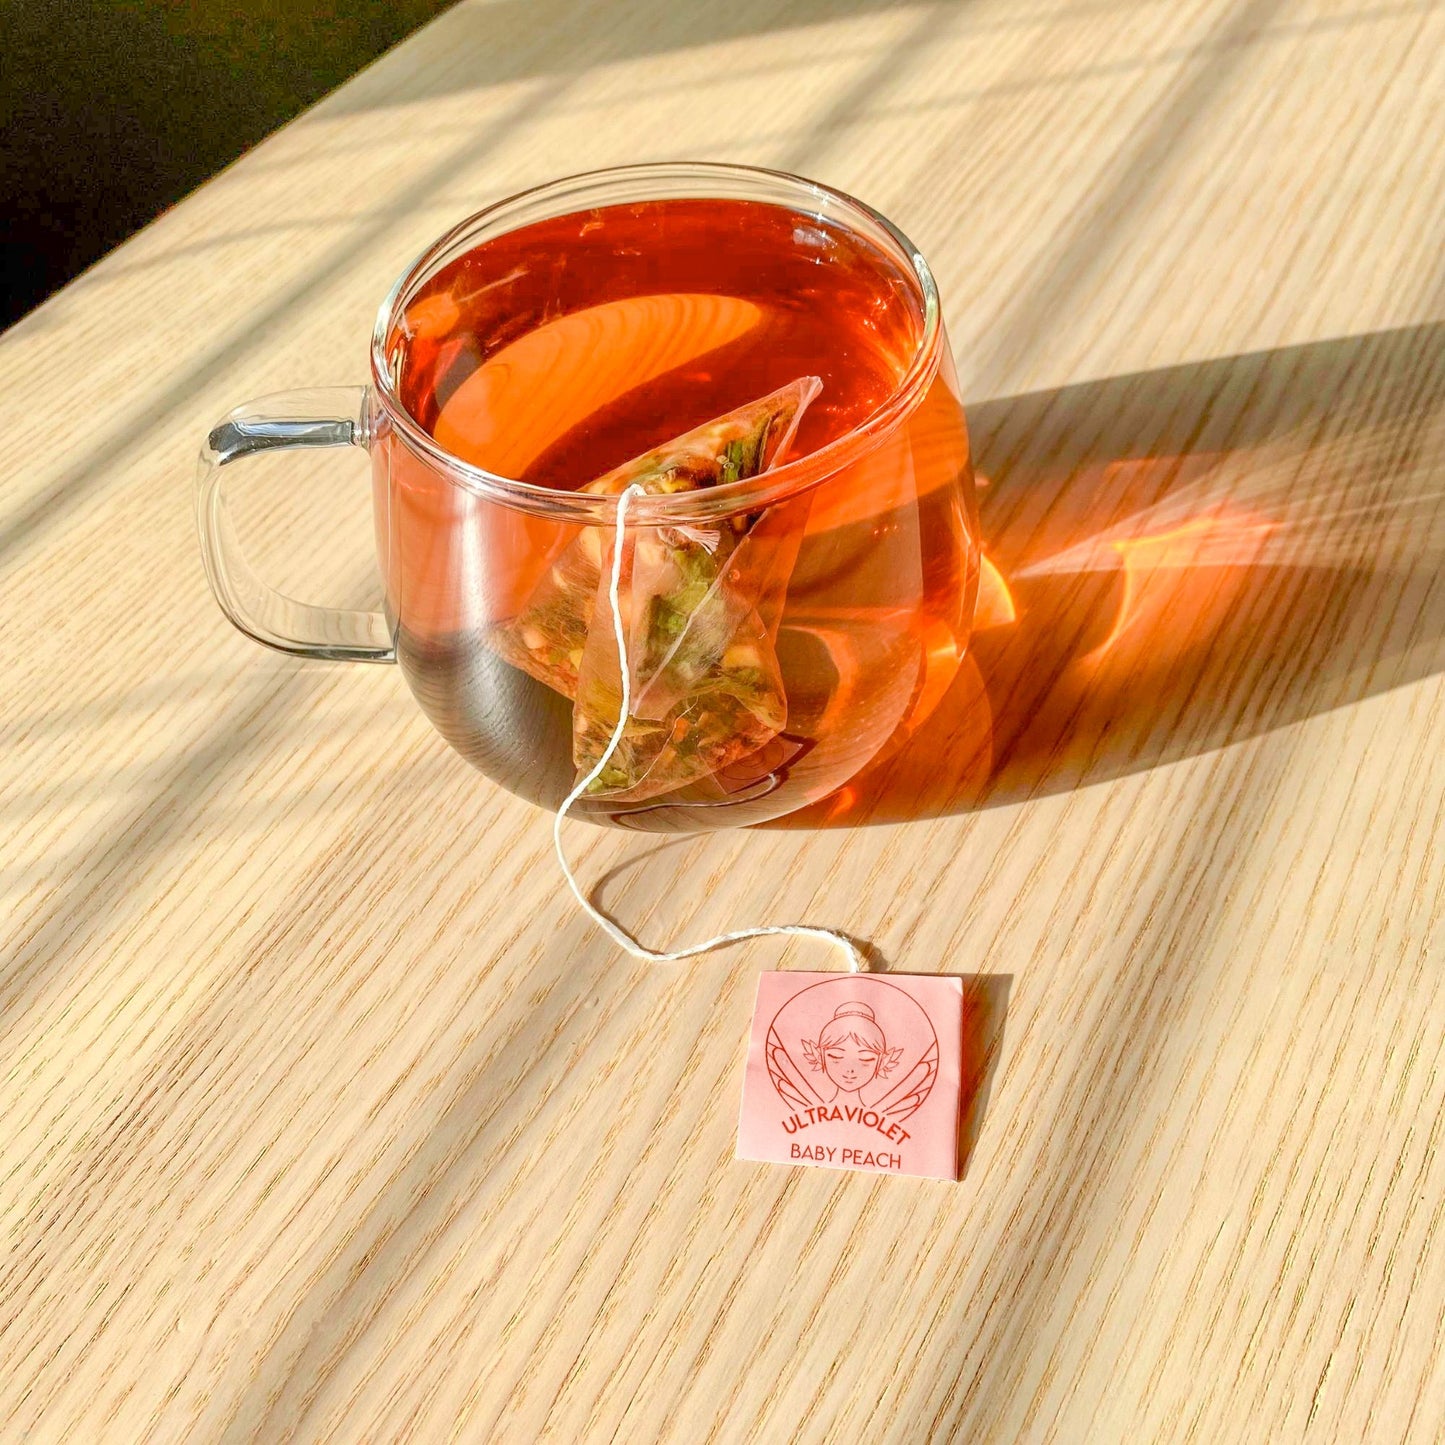 CLOSEOUT - Baby Peach Tea - 6 Pack (Prior Batch)